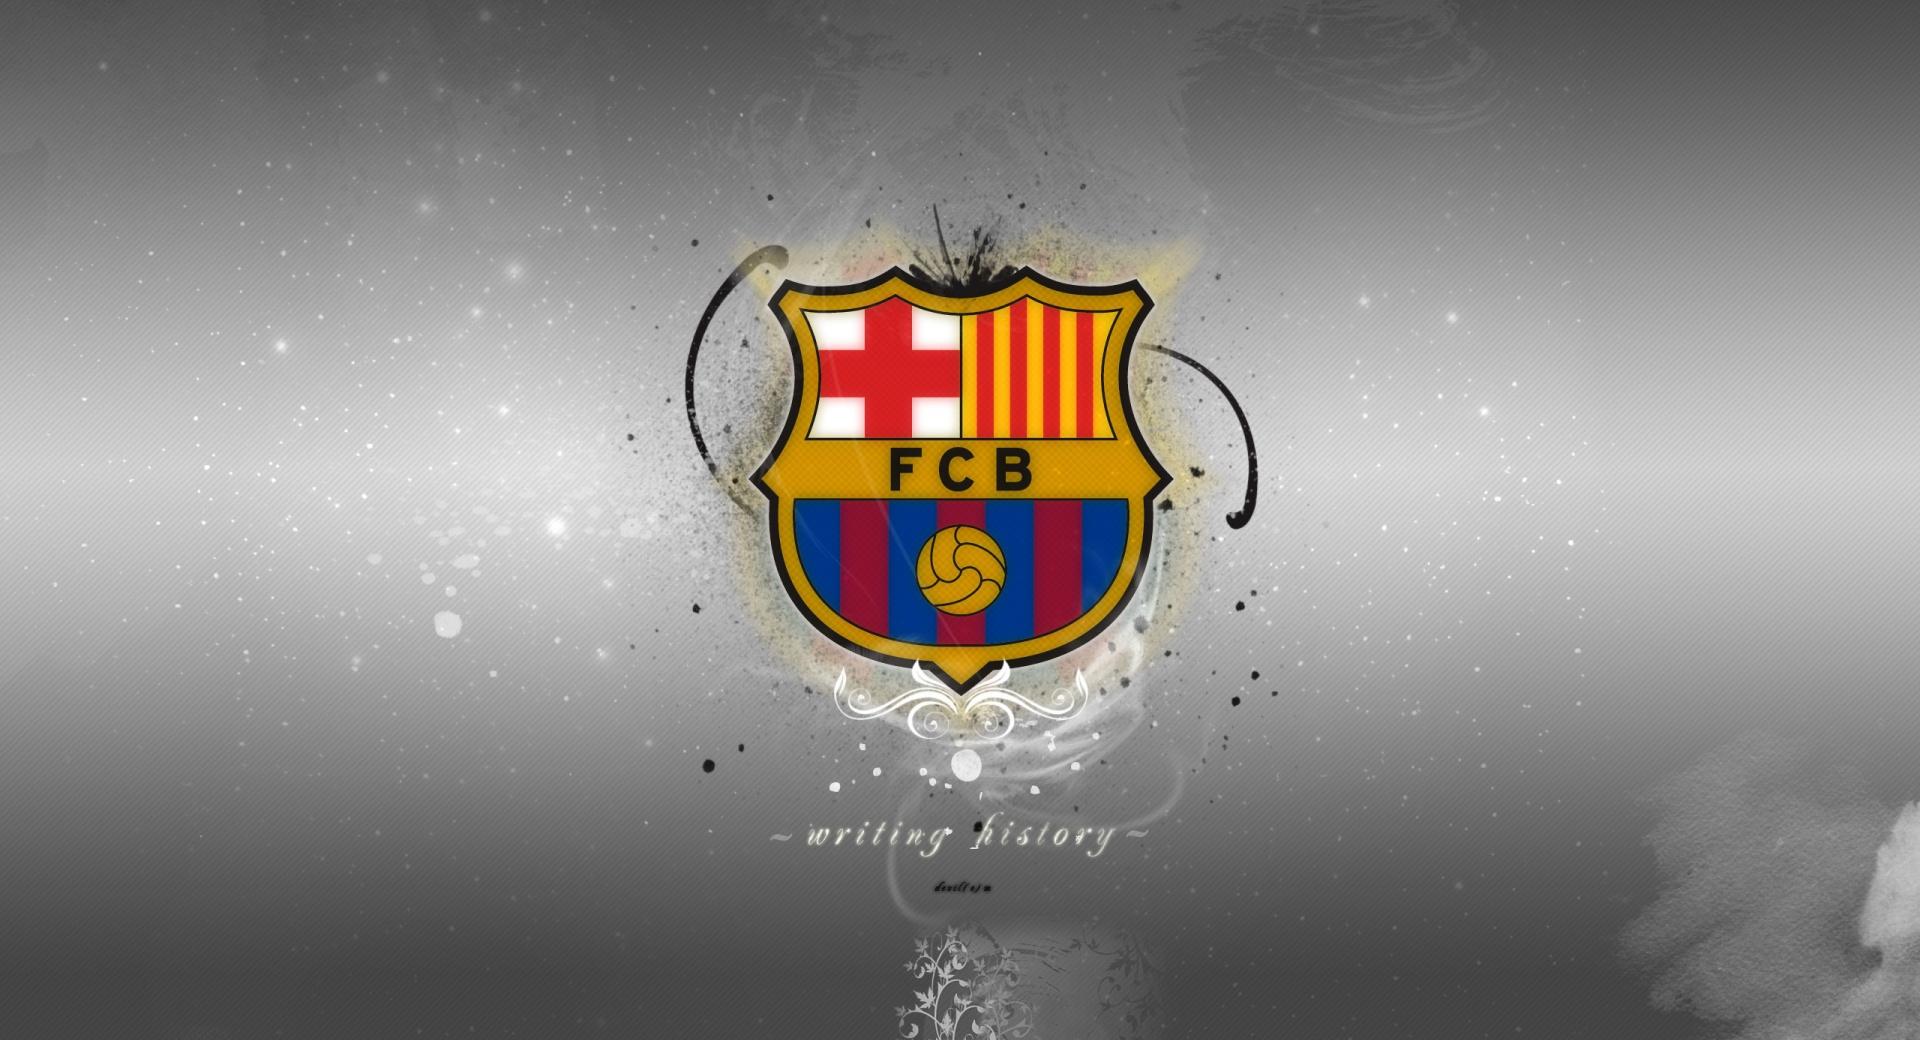 FC Barcelona Emblem at 1024 x 1024 iPad size wallpapers HD quality